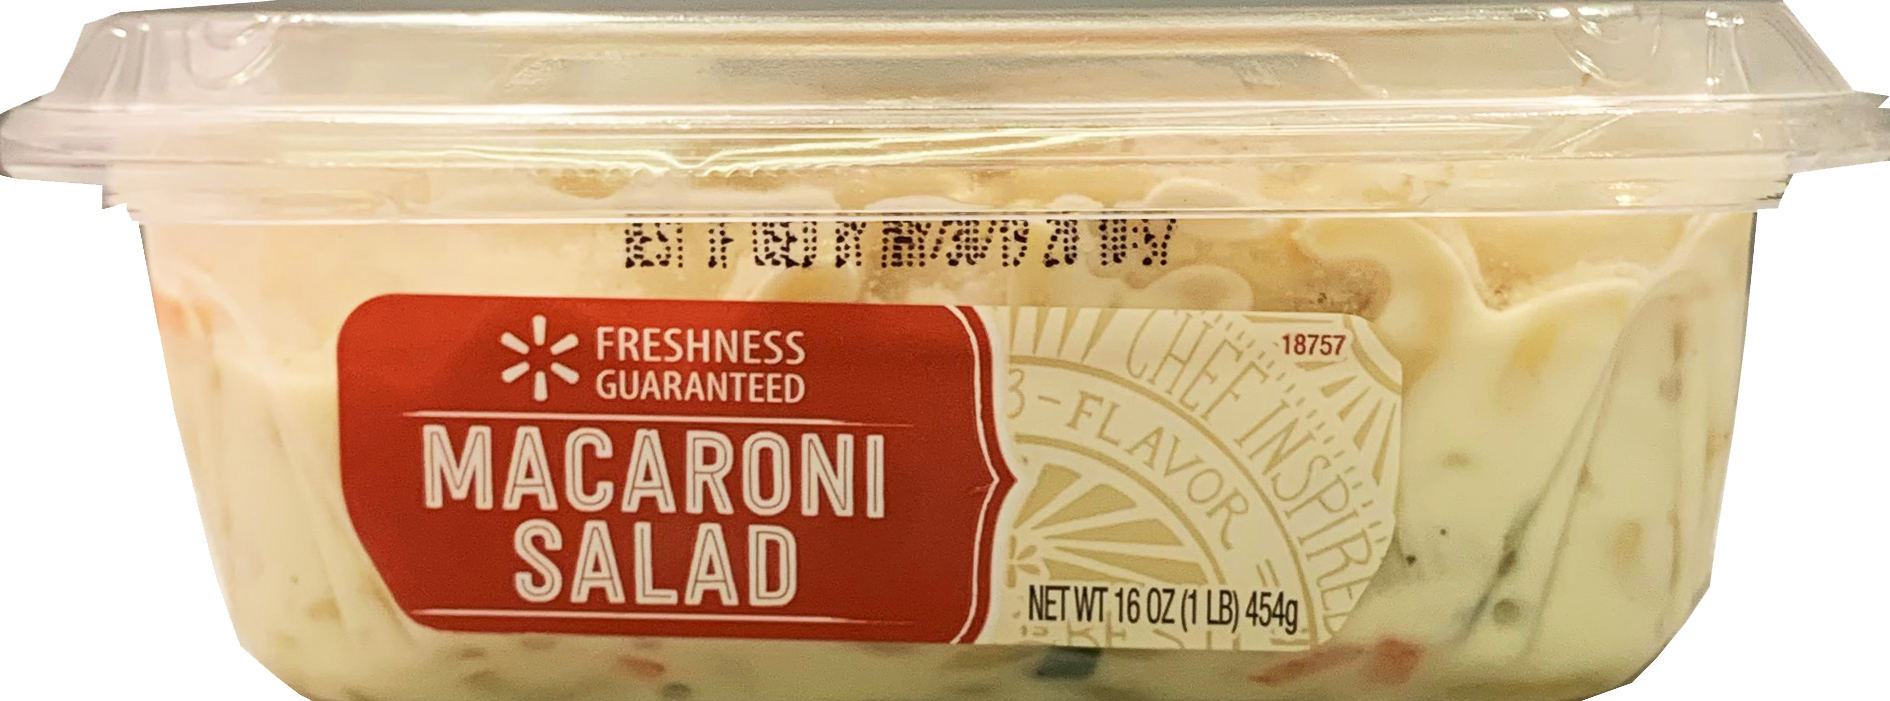 Freshness Guaranteed Macaroni Salad, 16 Oz